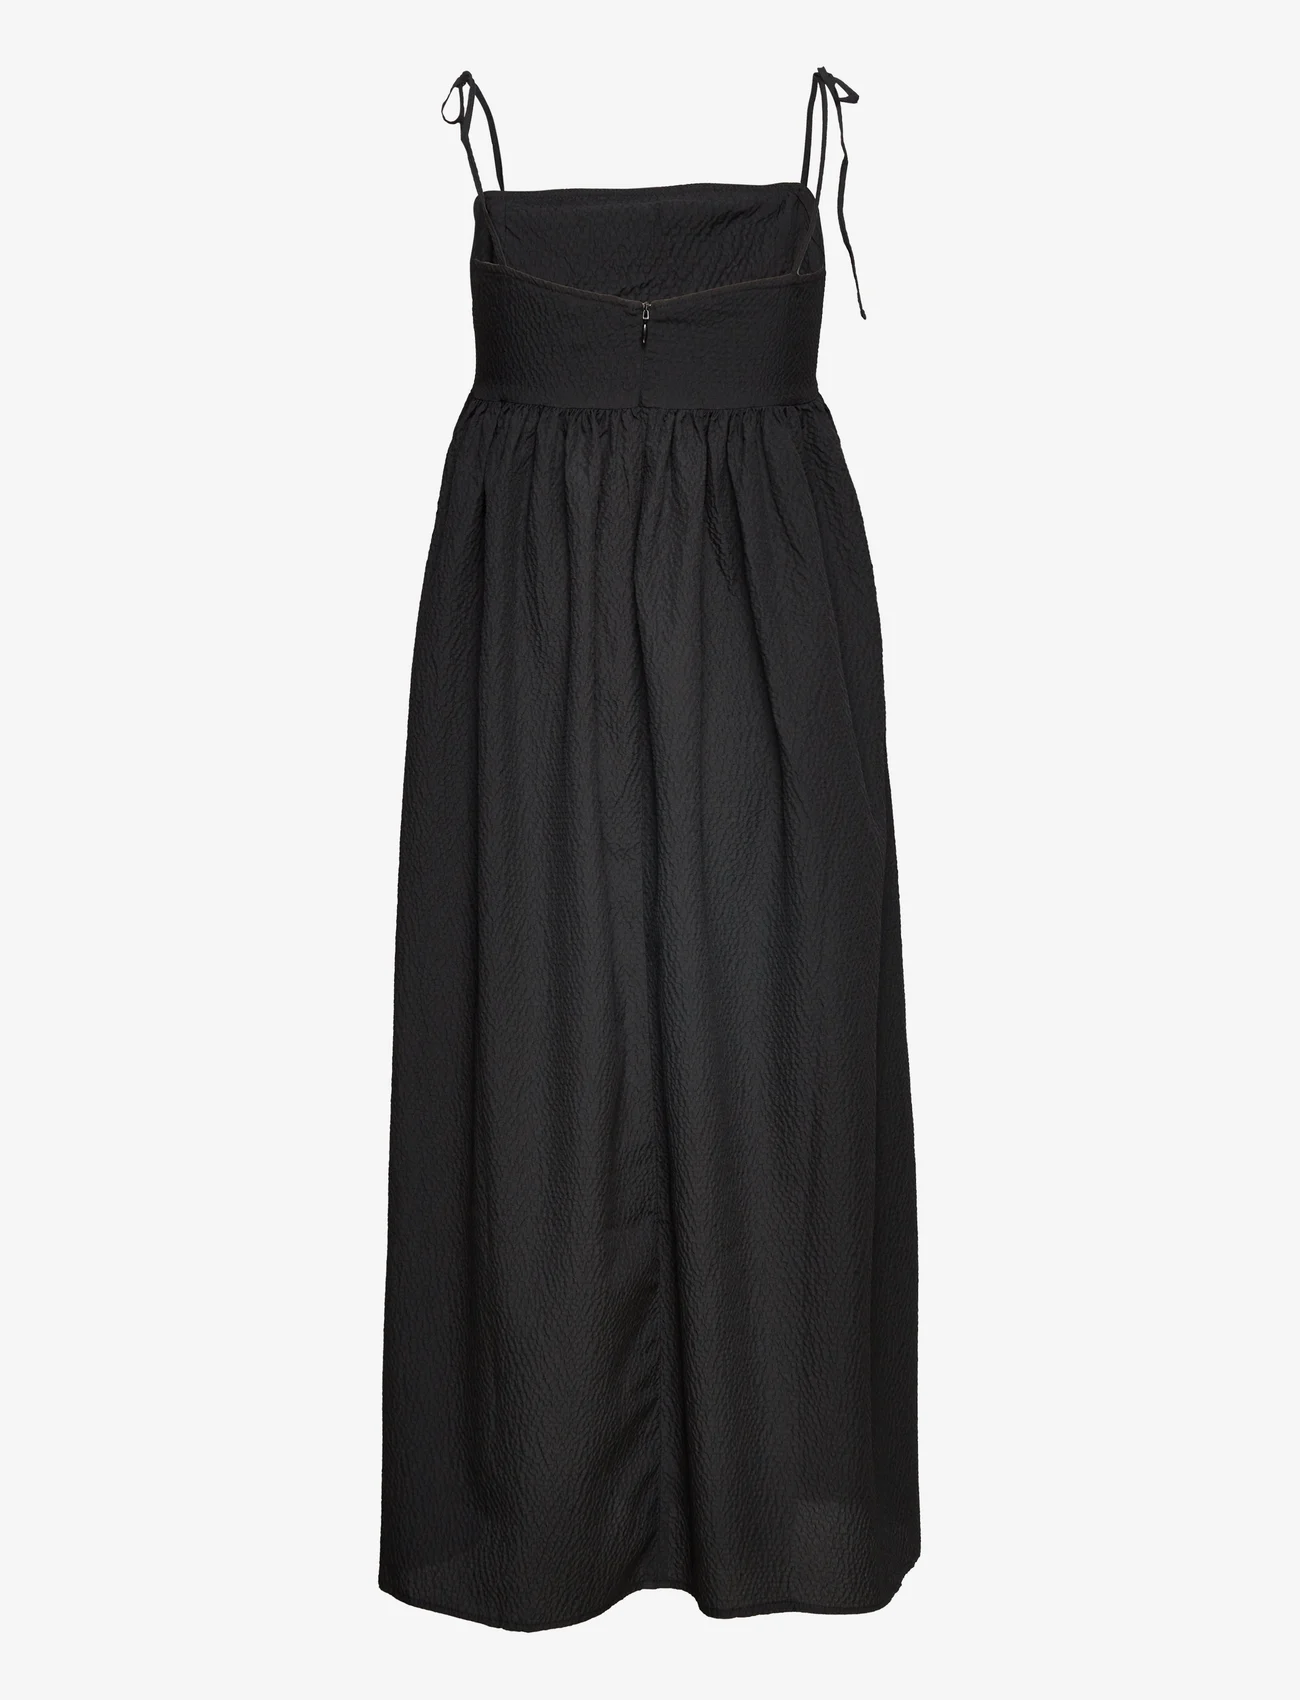 Notes du Nord - Eve Maxi Dress - vidutinio ilgio suknelės - noir - 1